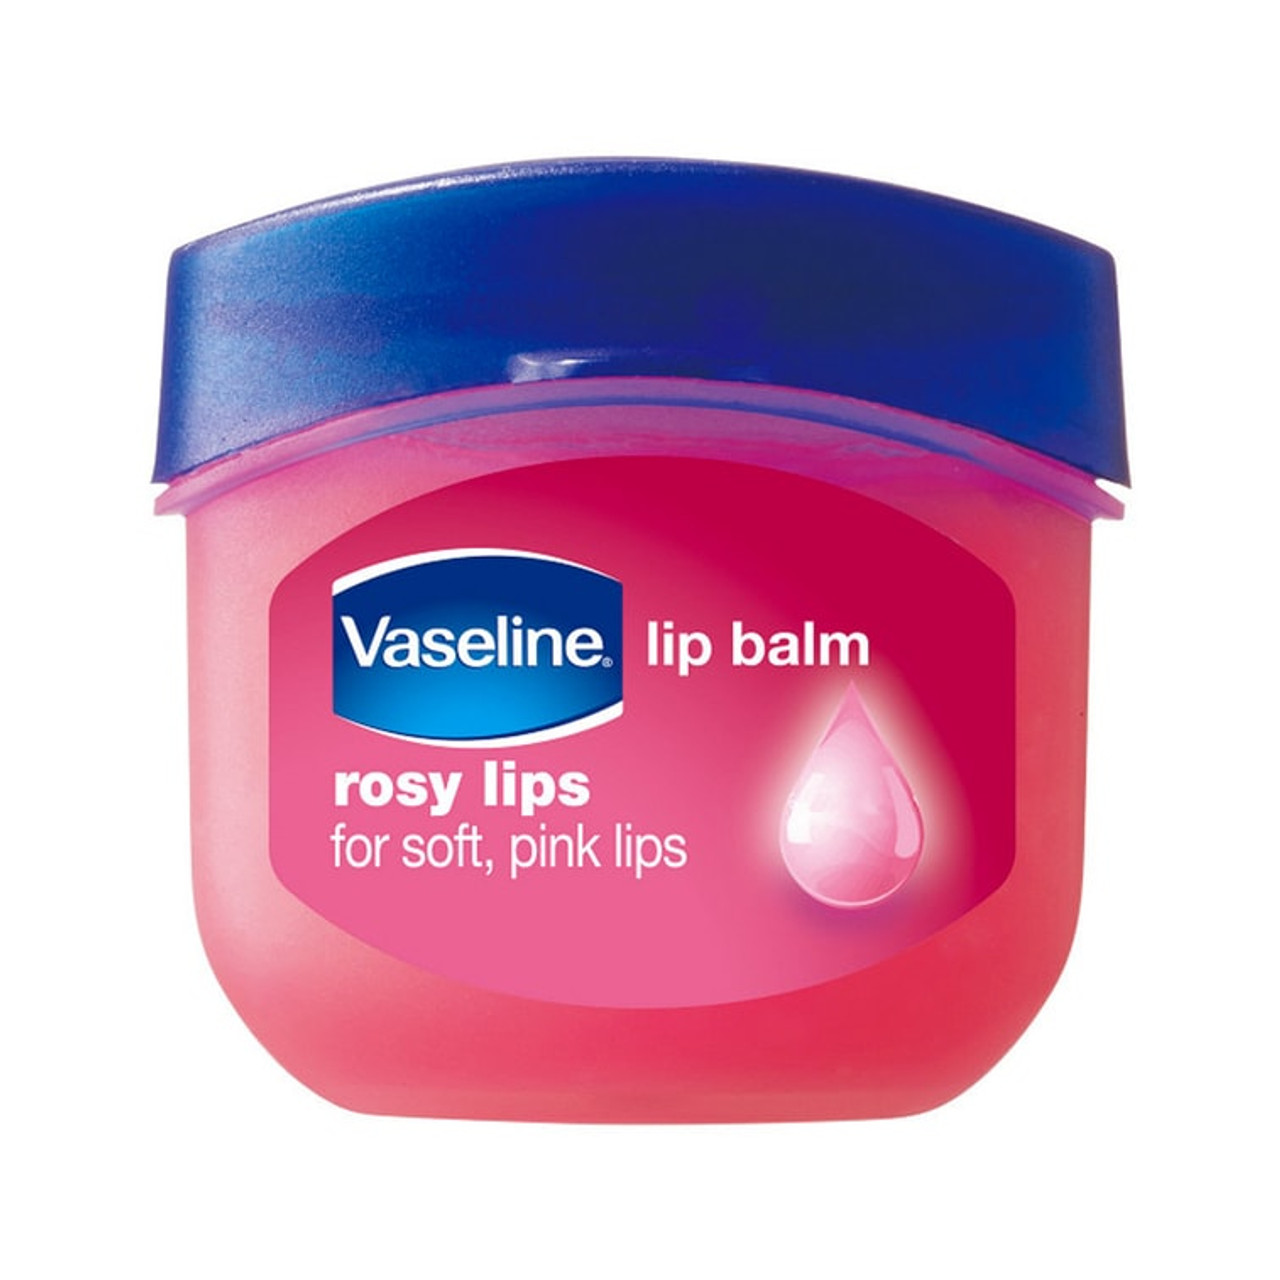 At regere Orkan prop Vaseline Rosy Lips 02080JB24 - Apex Beauty Supply